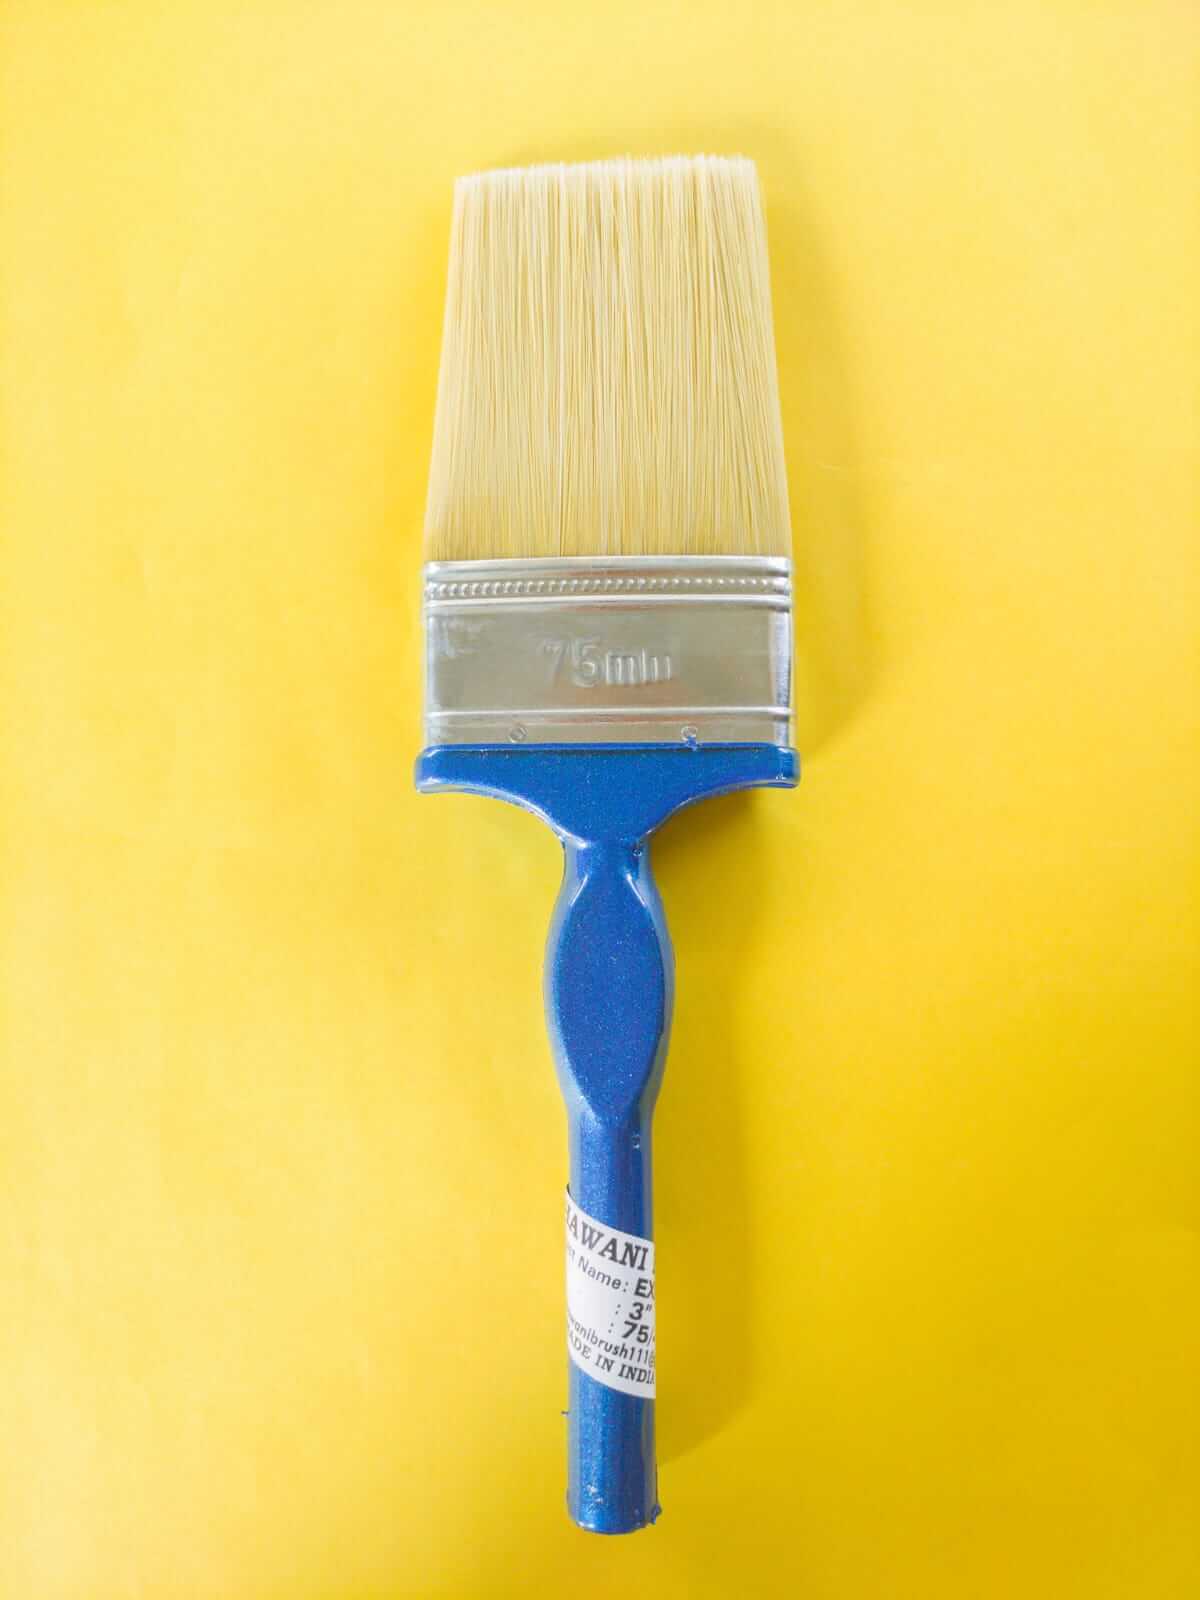 export-3-inch-paint-brush